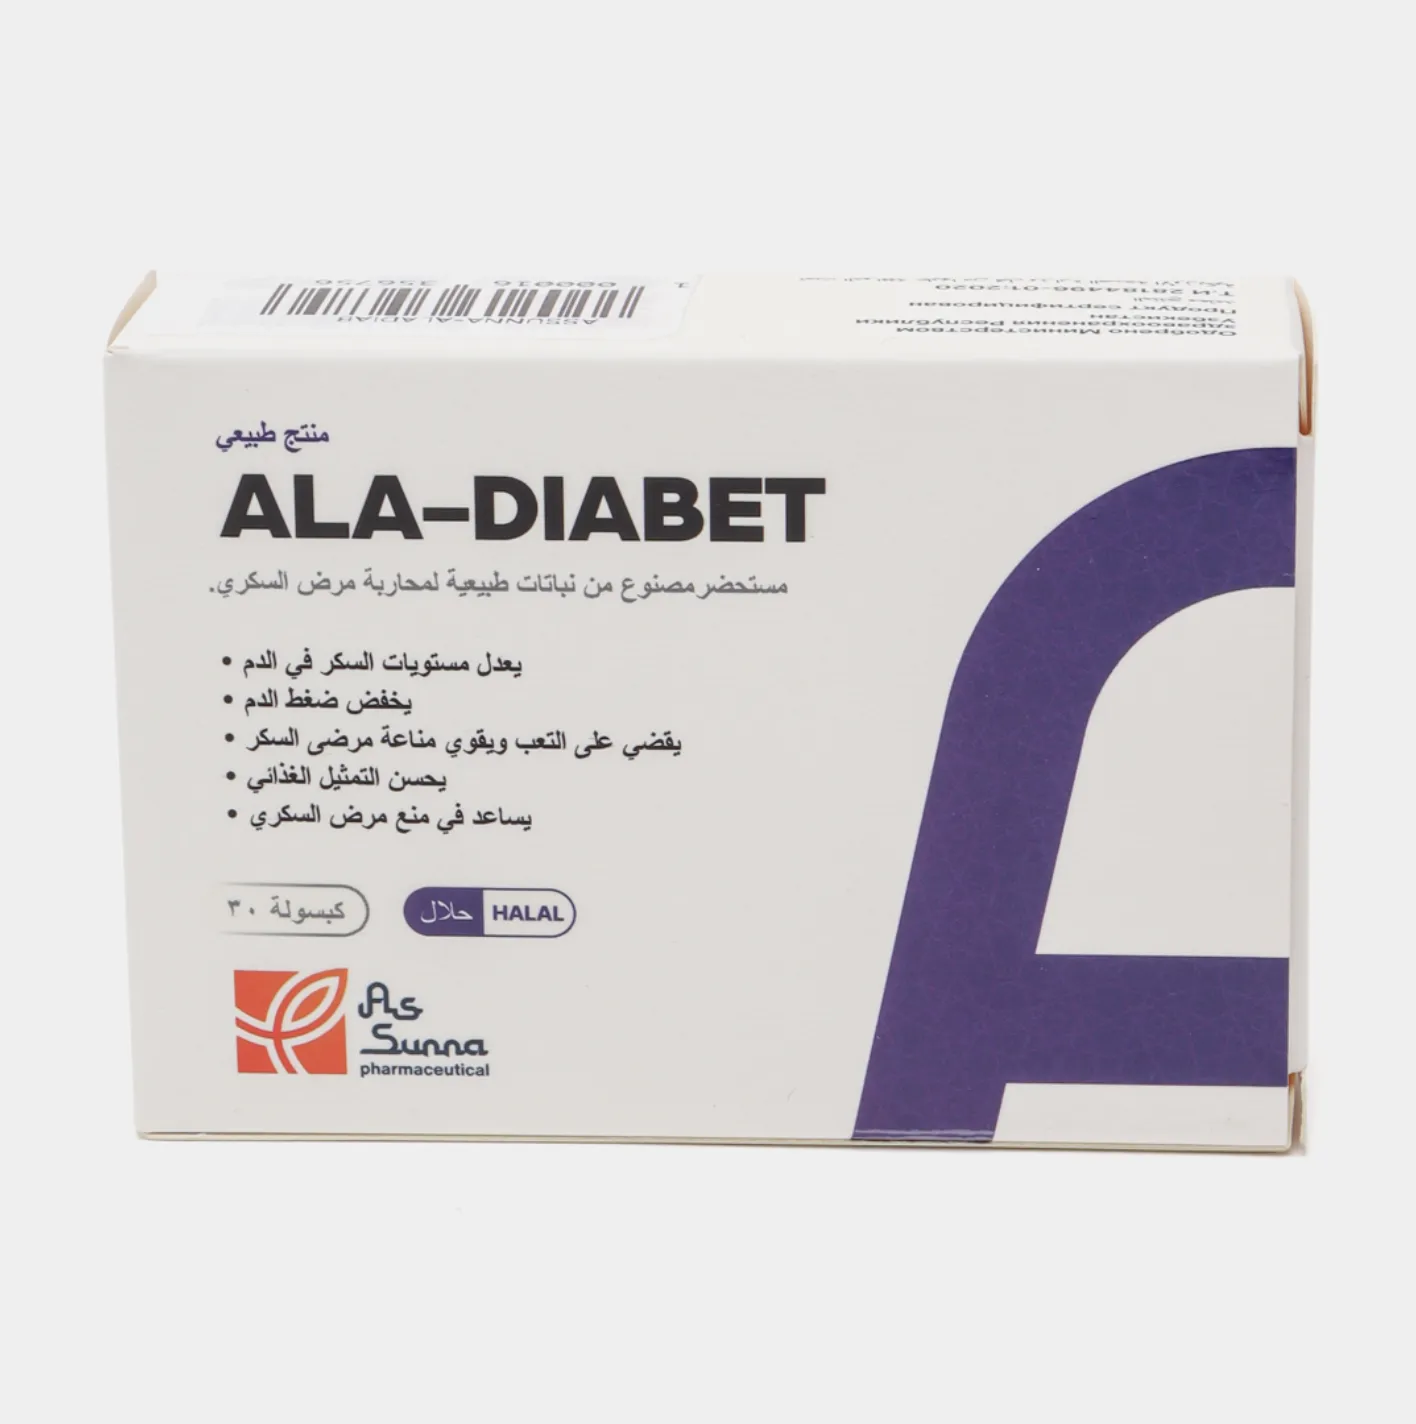 Alla-diabet Fz-sunna, 30 kapsula - diabetga qarshi#1